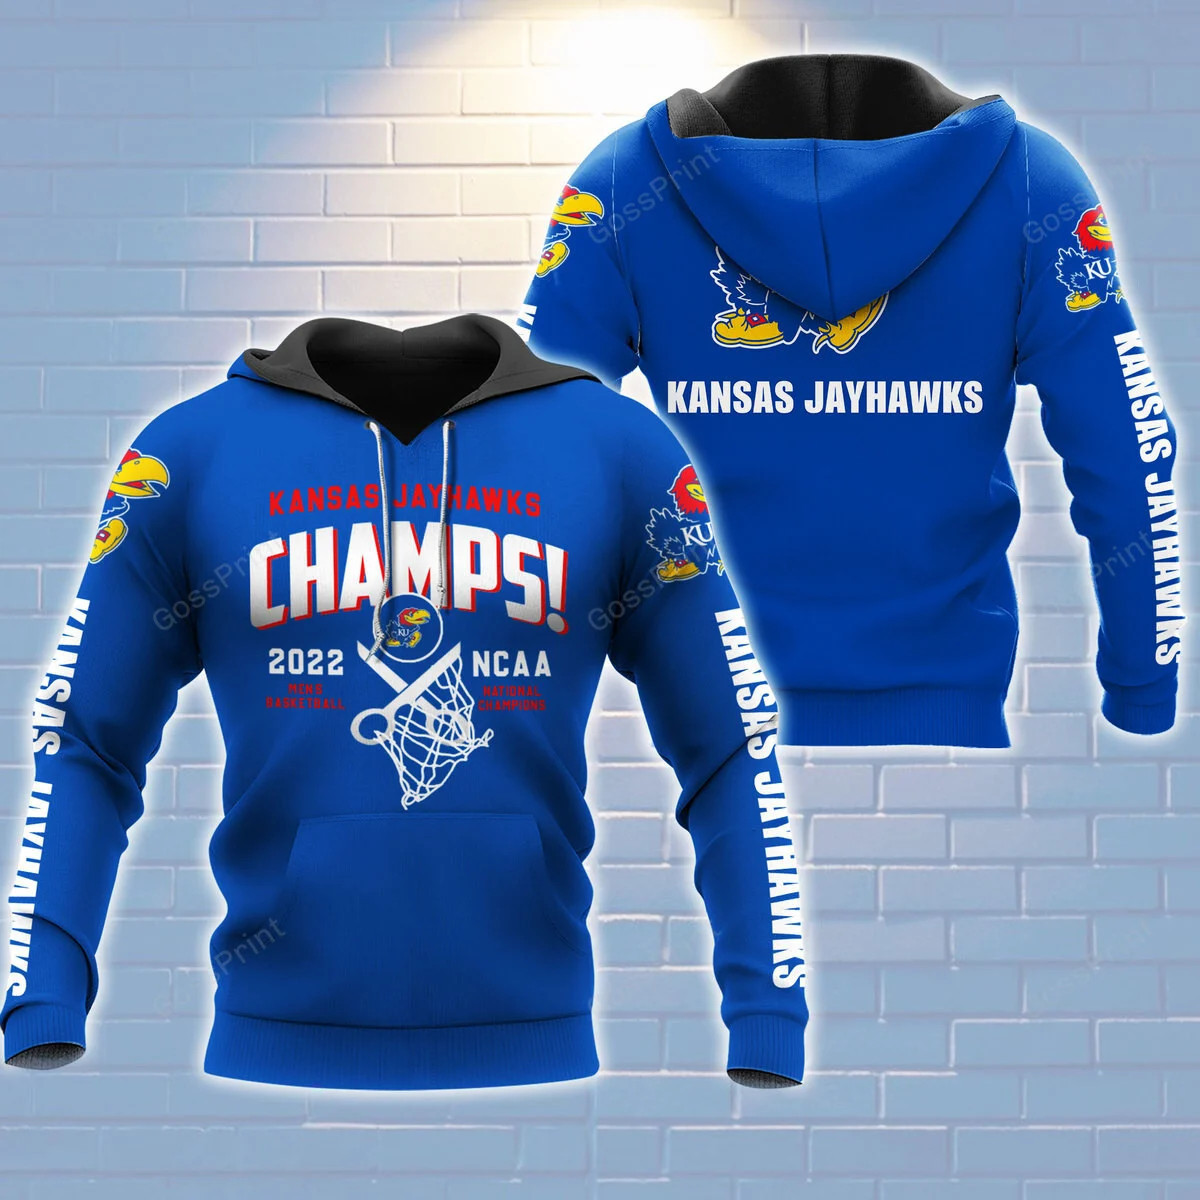 Kansas Jayhawks Champions Shirt 3D All Over Printed Shirt Ver 1